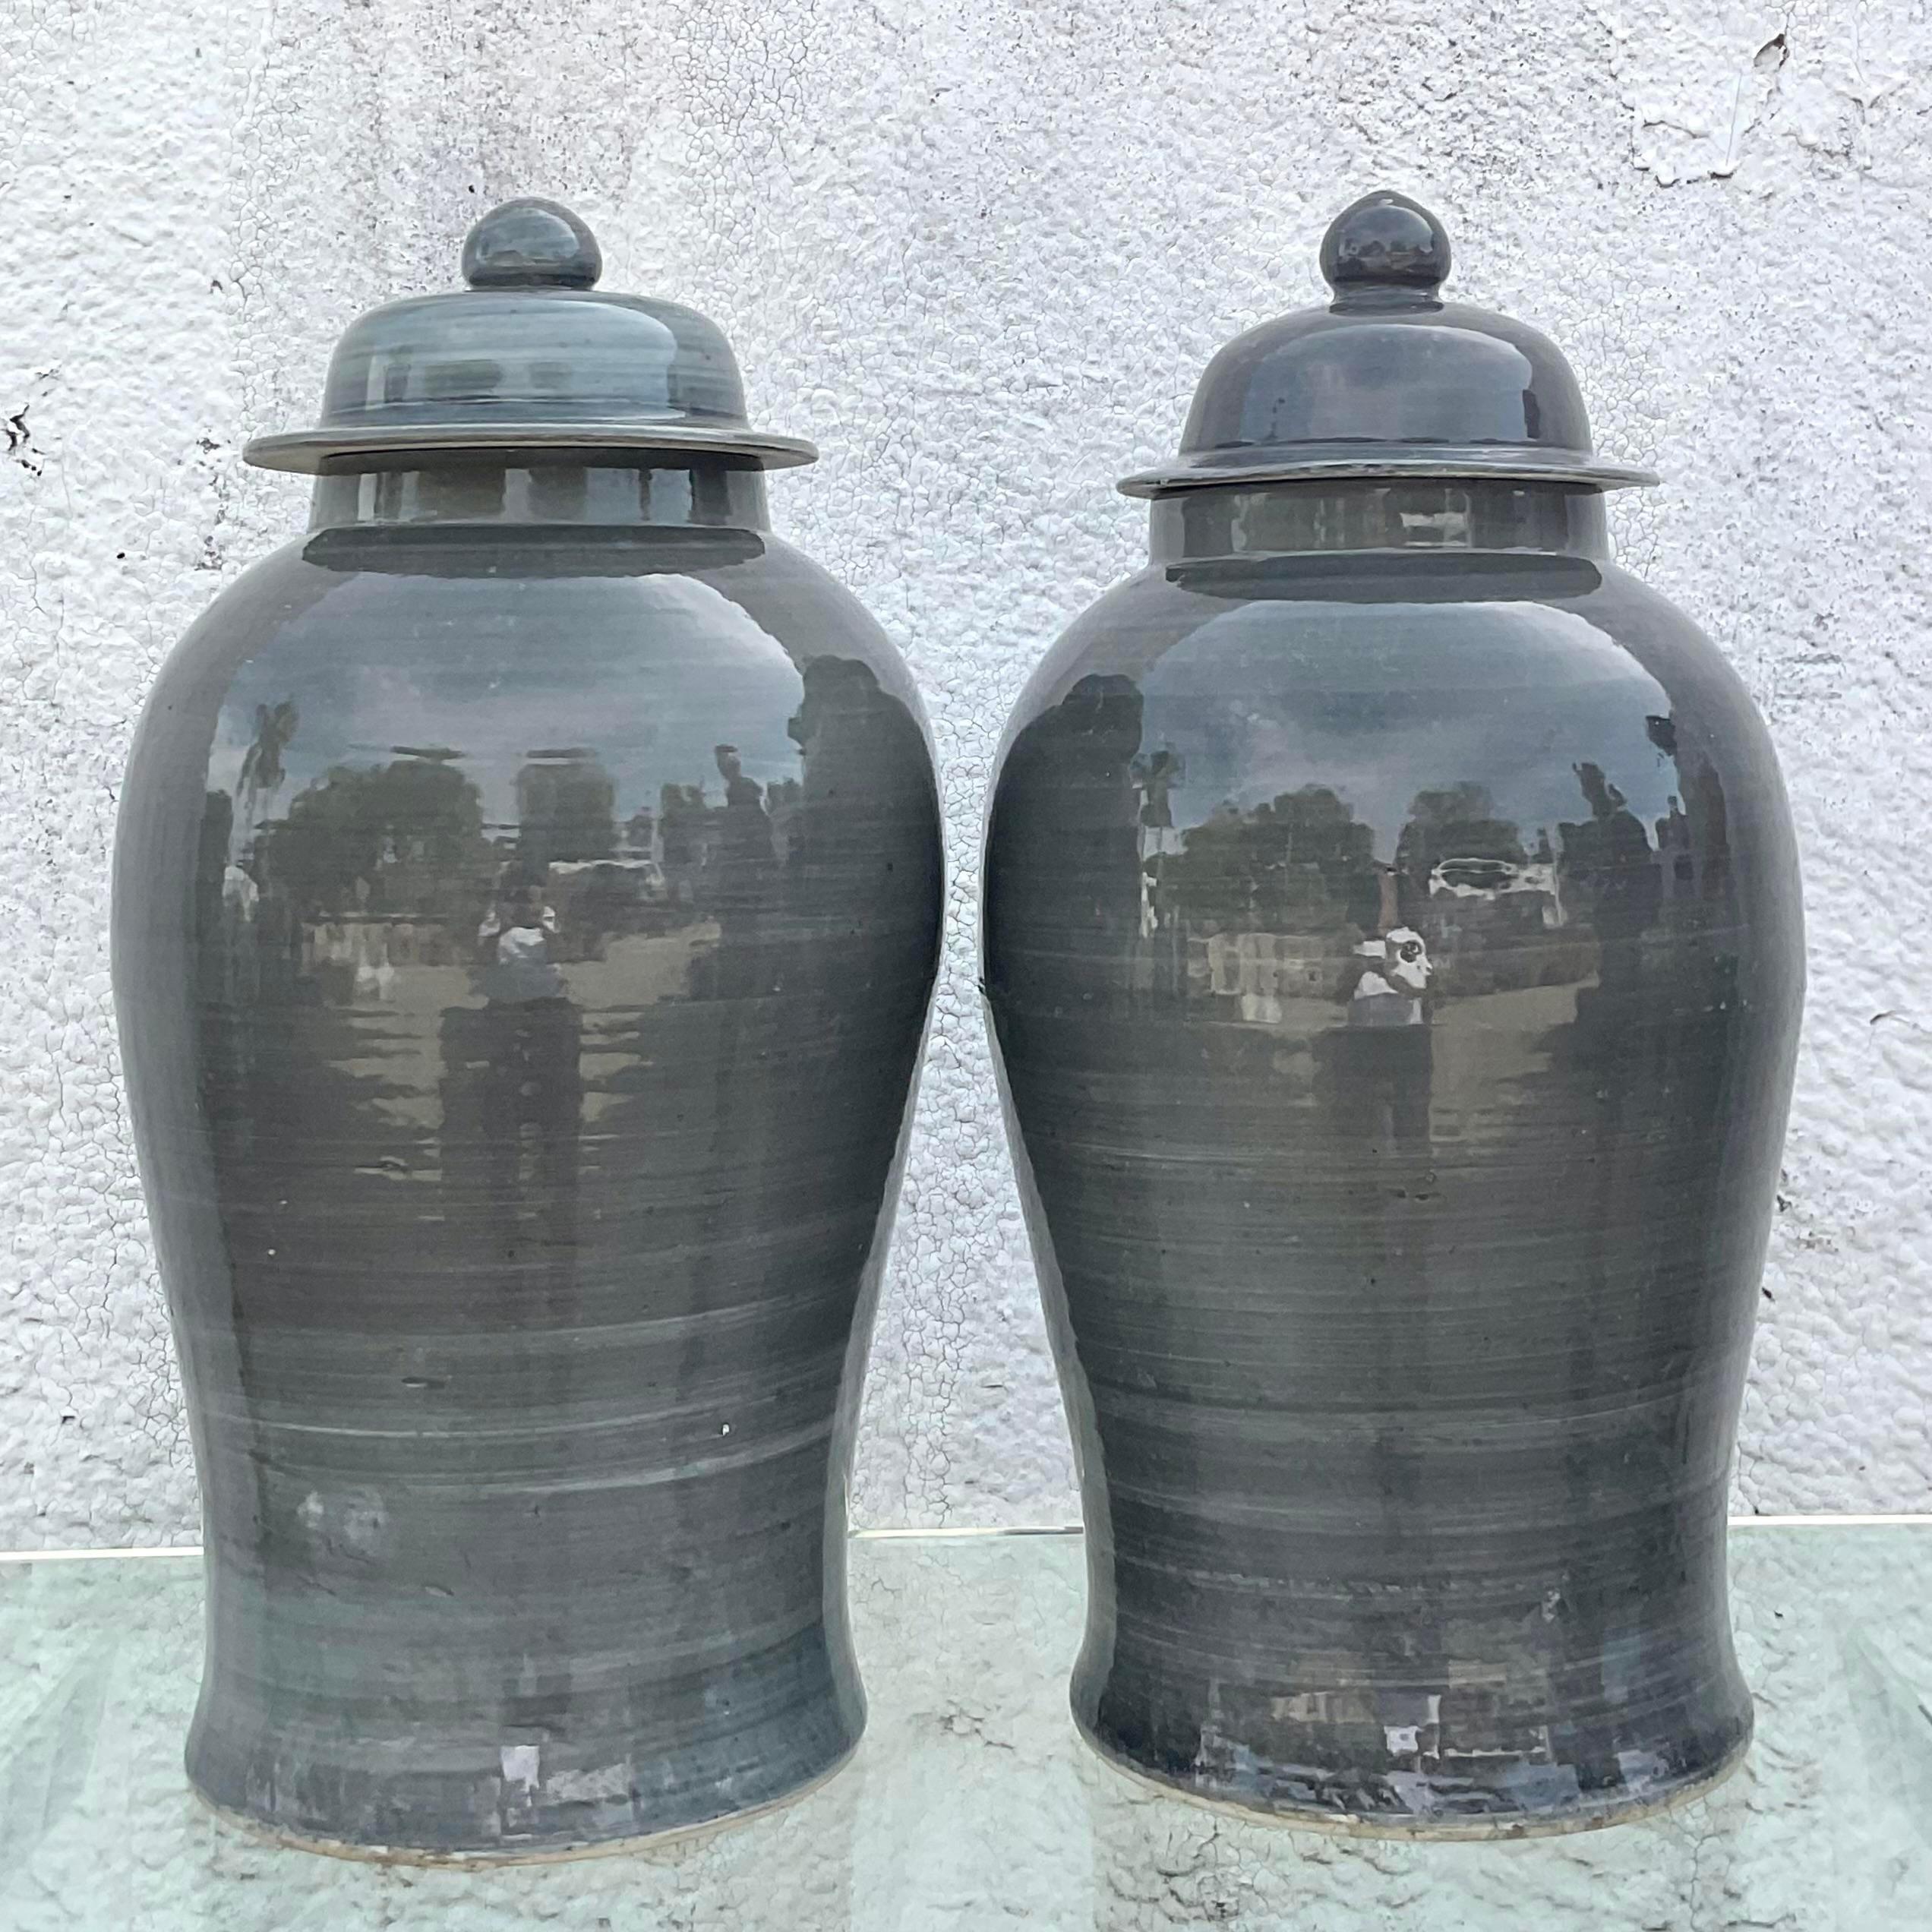 Vintage Boho glasierte Keramik Ingwer Jars - ein Paar (20. Jahrhundert) im Angebot